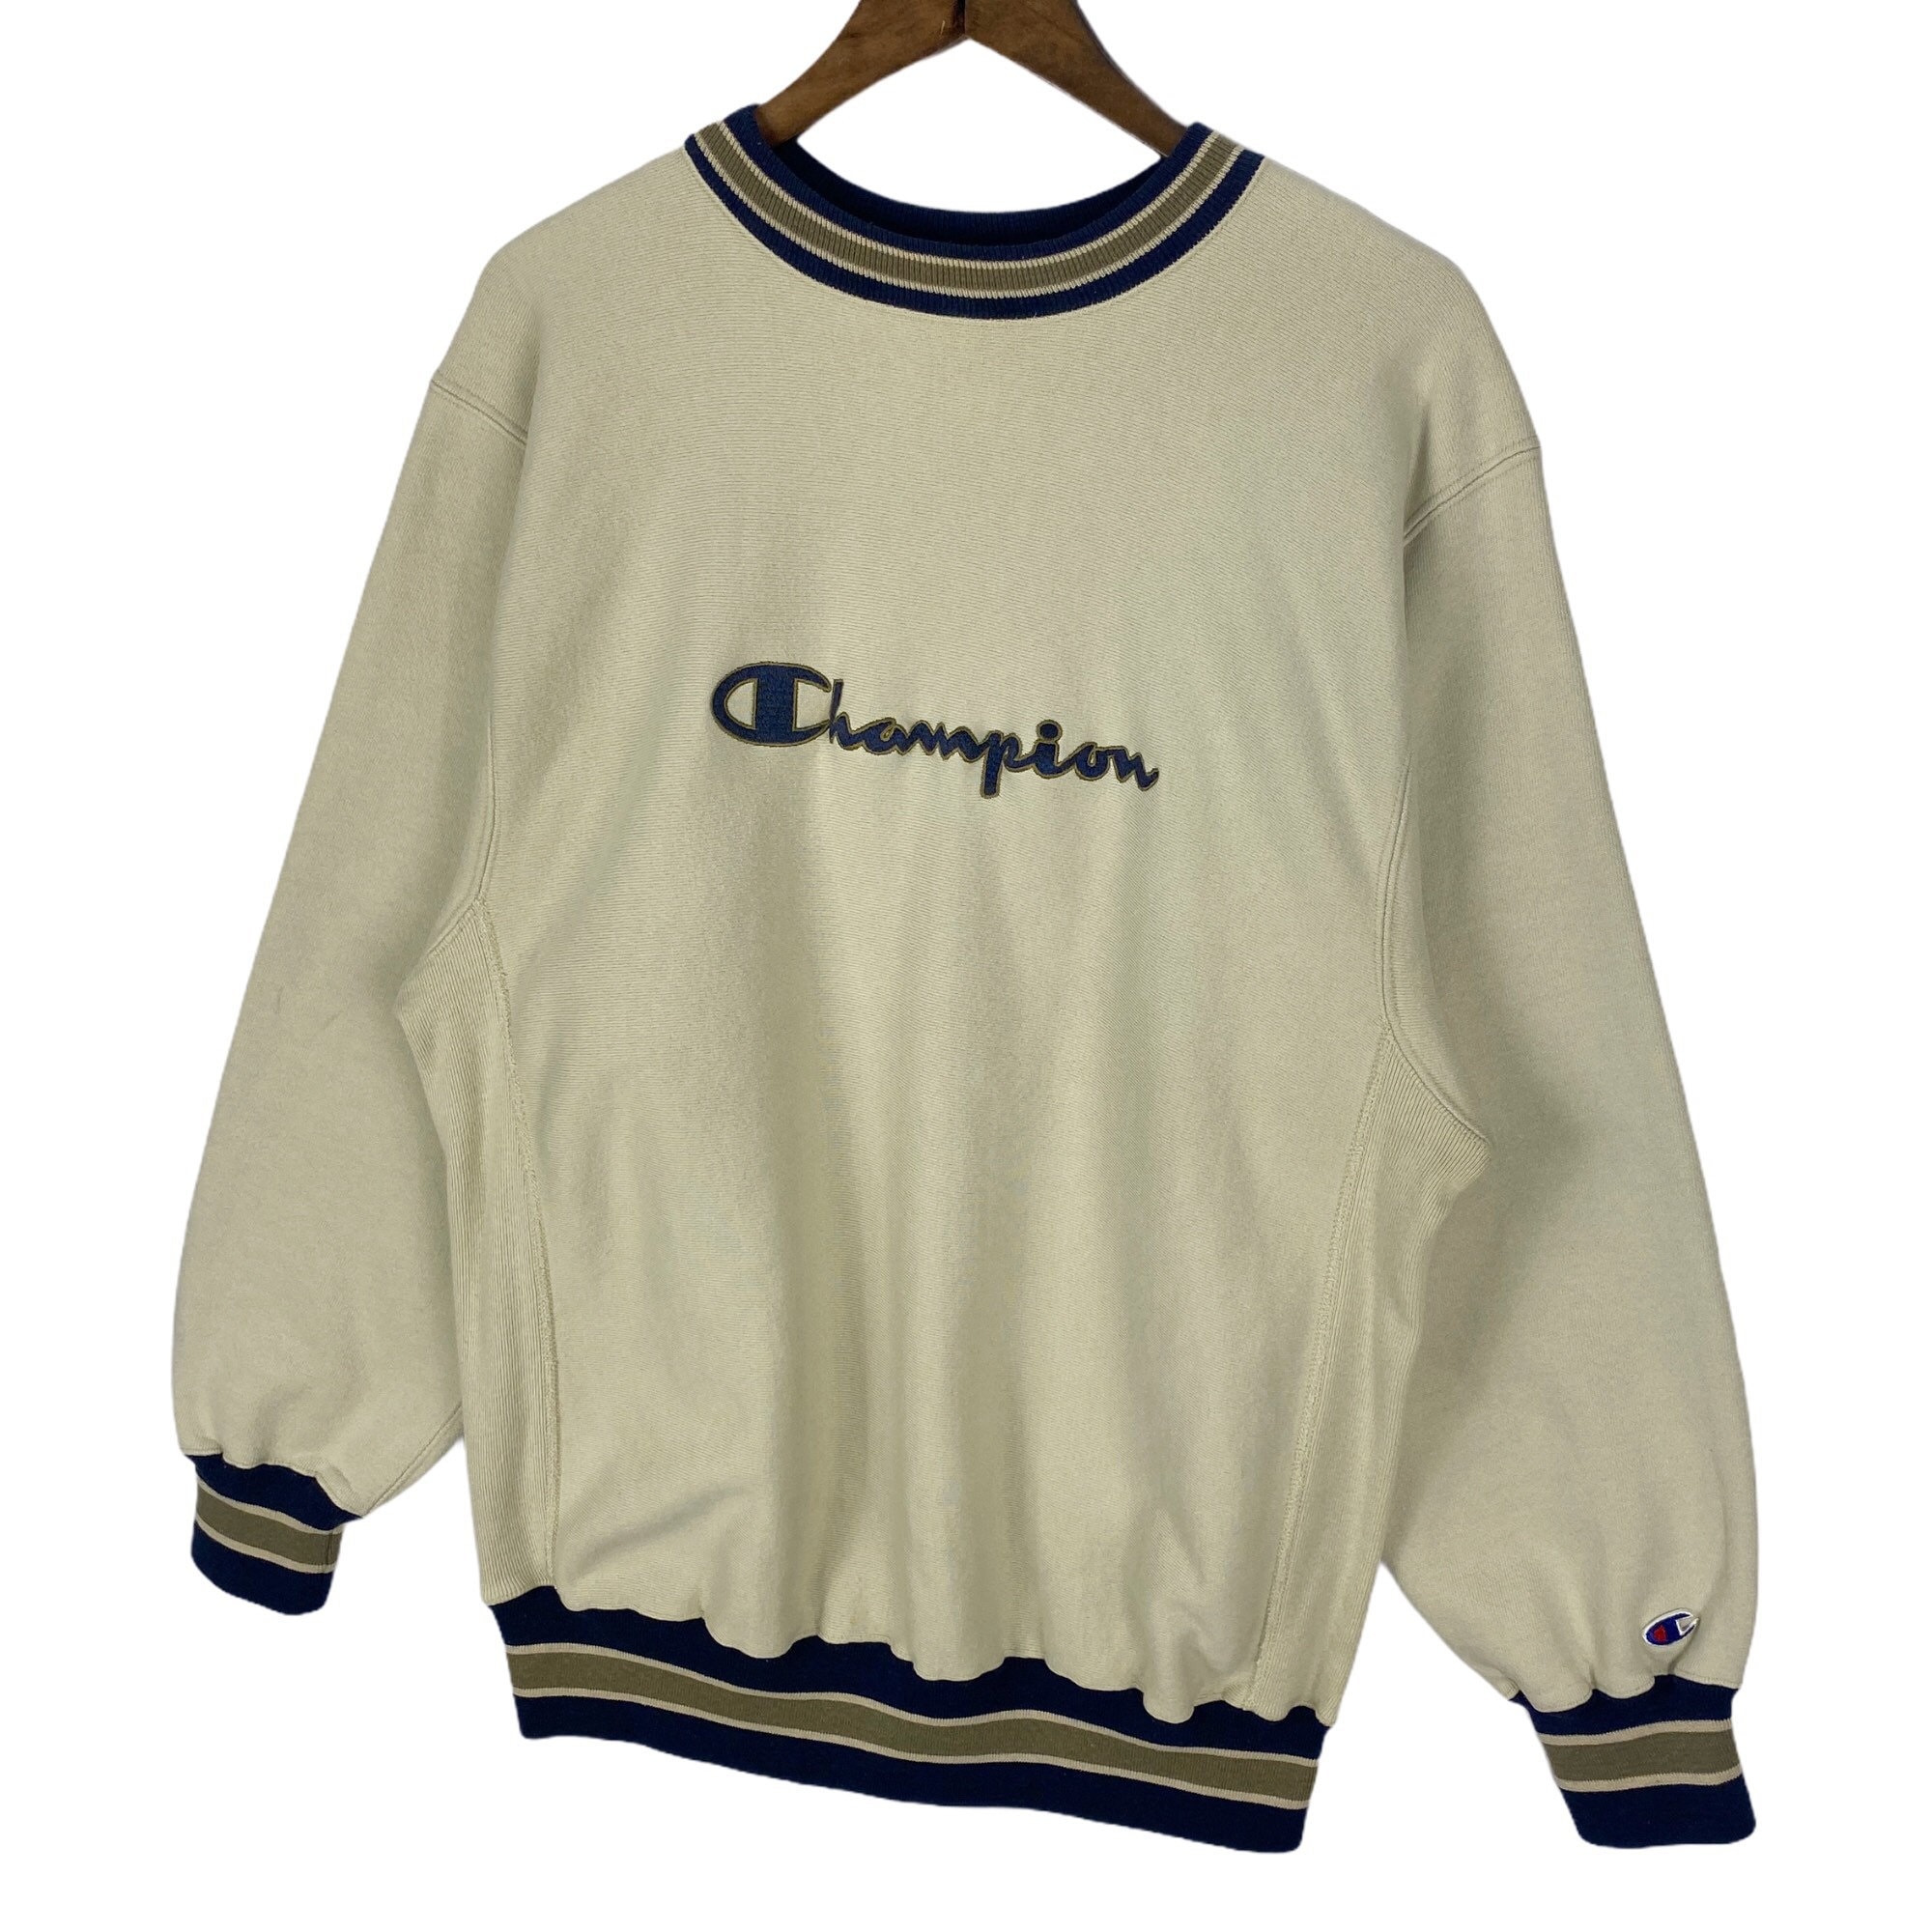 90s Champion Nebraska Vintage Reverse Weave Crewneck Sweatshirt. Tagged As A Large